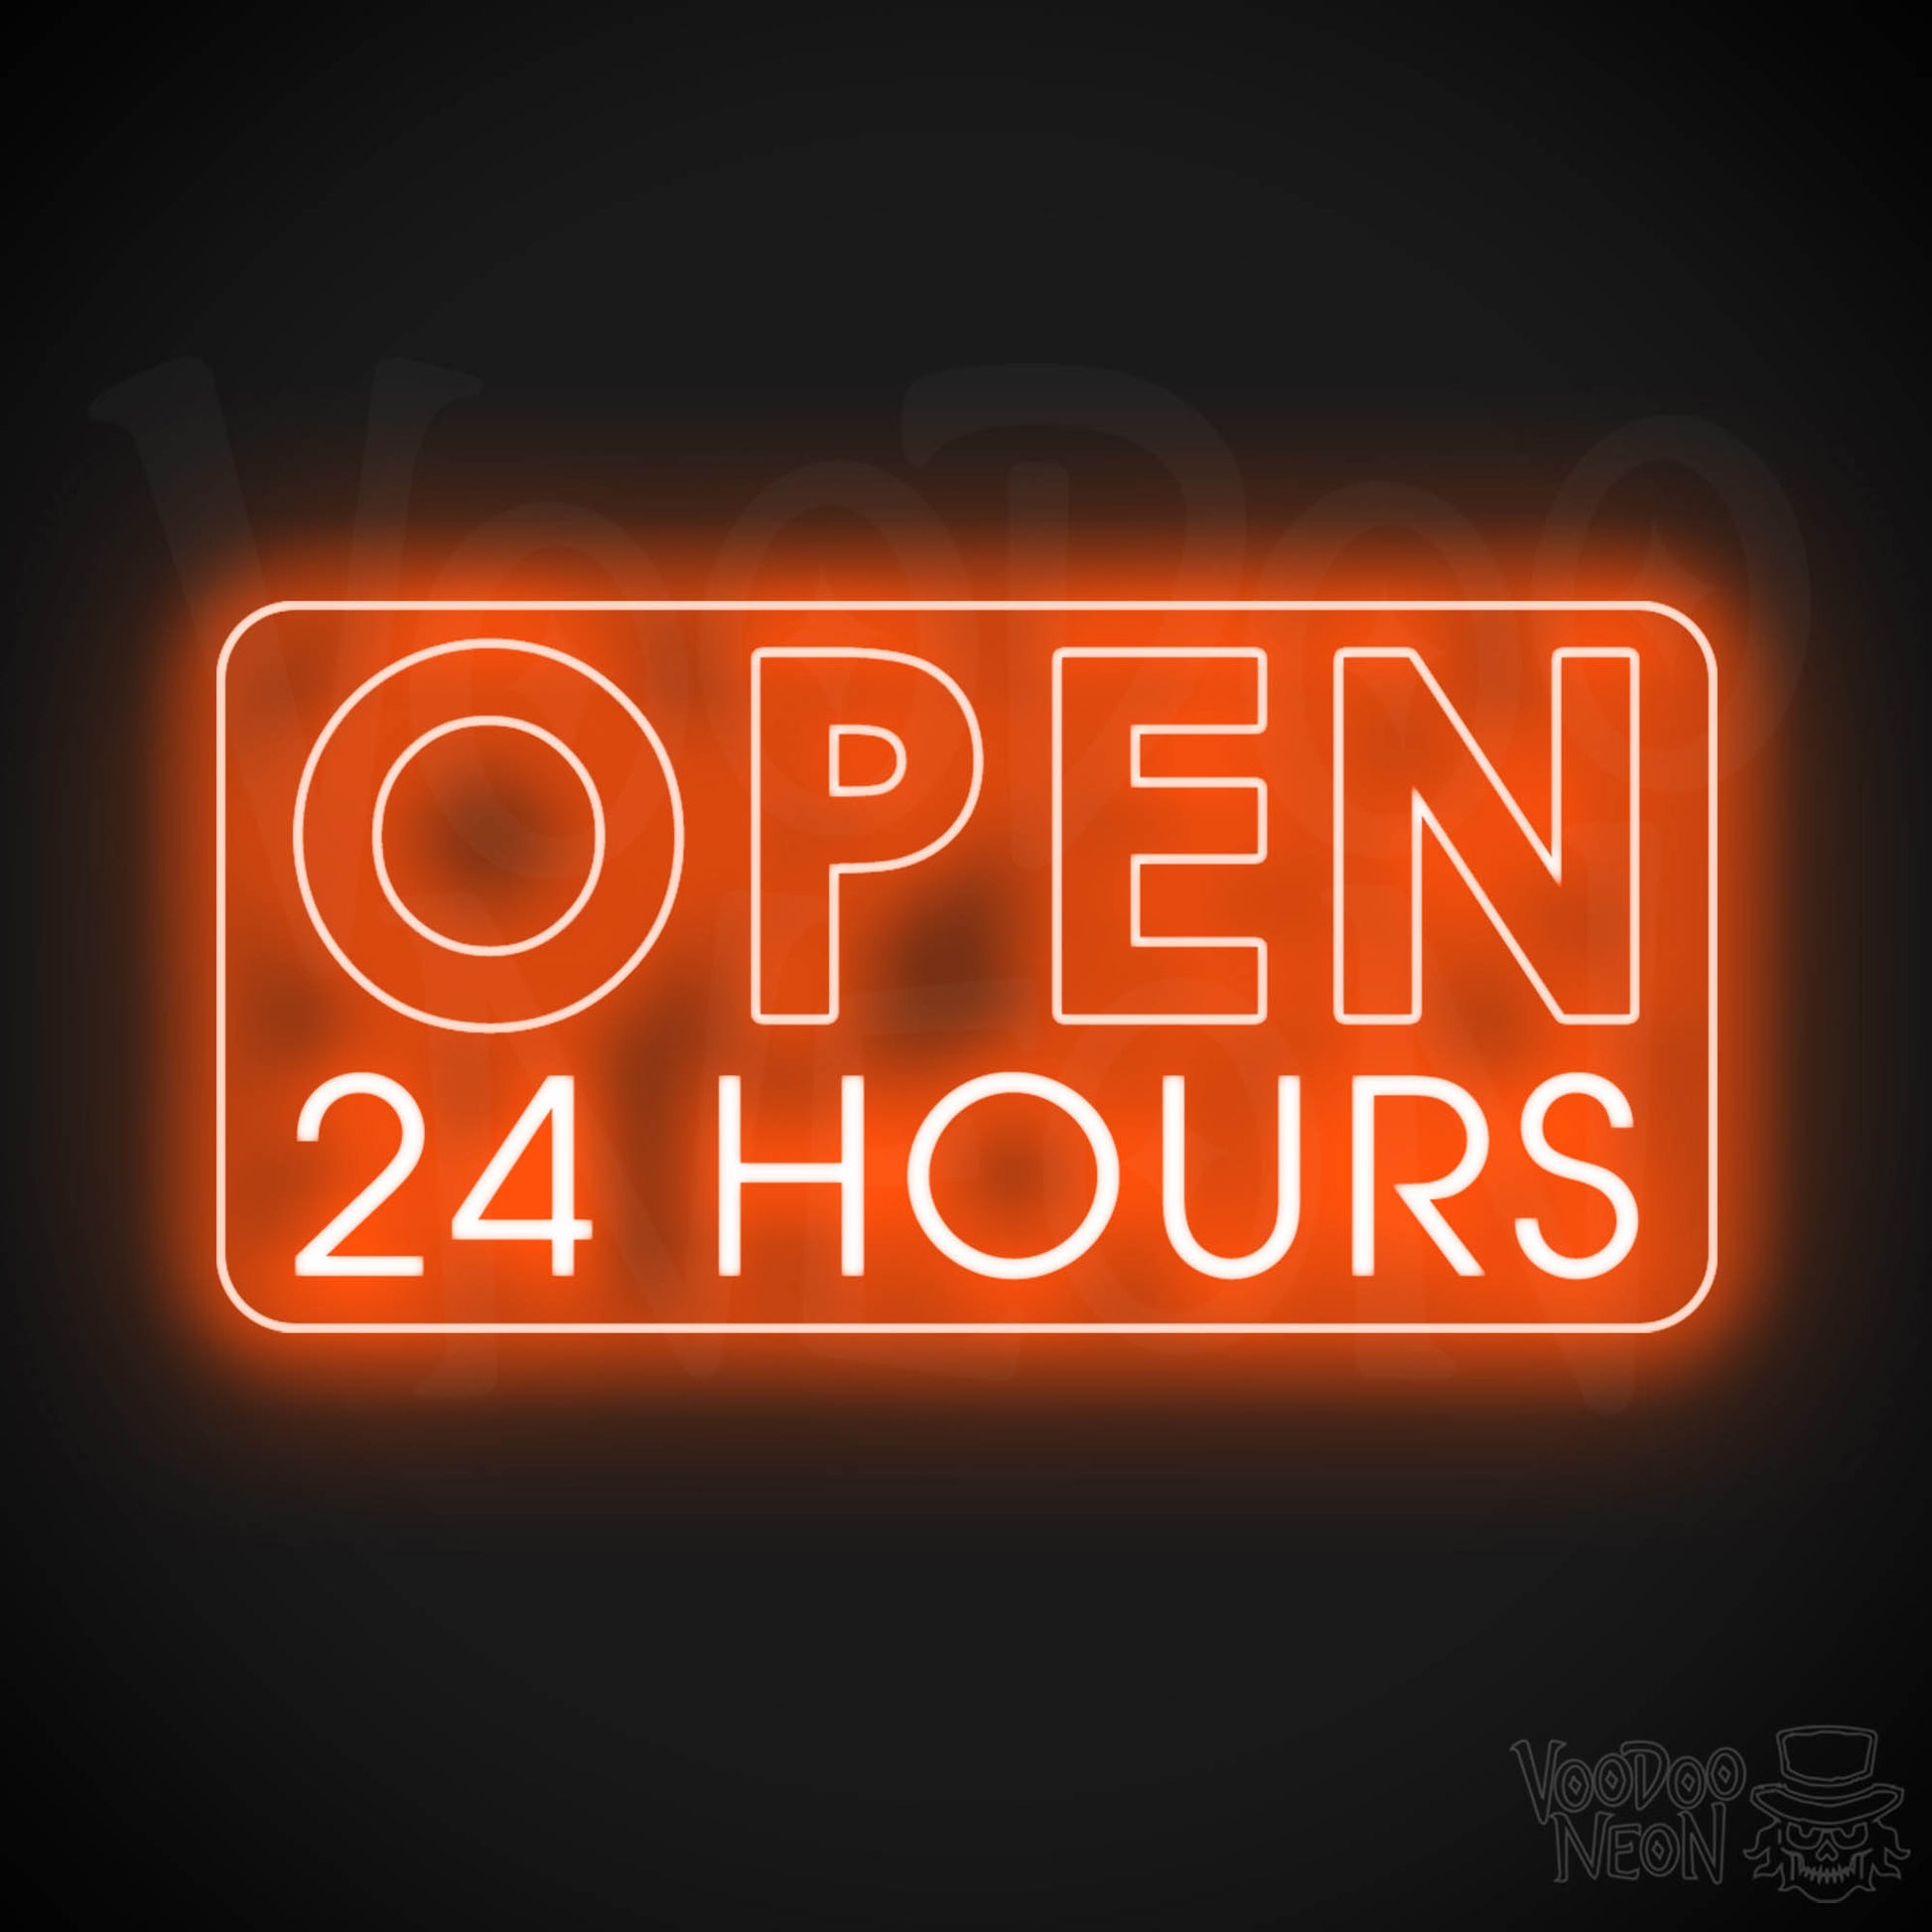 Open 24 Hours Neon Sign - Neon Open 24 Hours Sign - Shop Signs - Color Orange